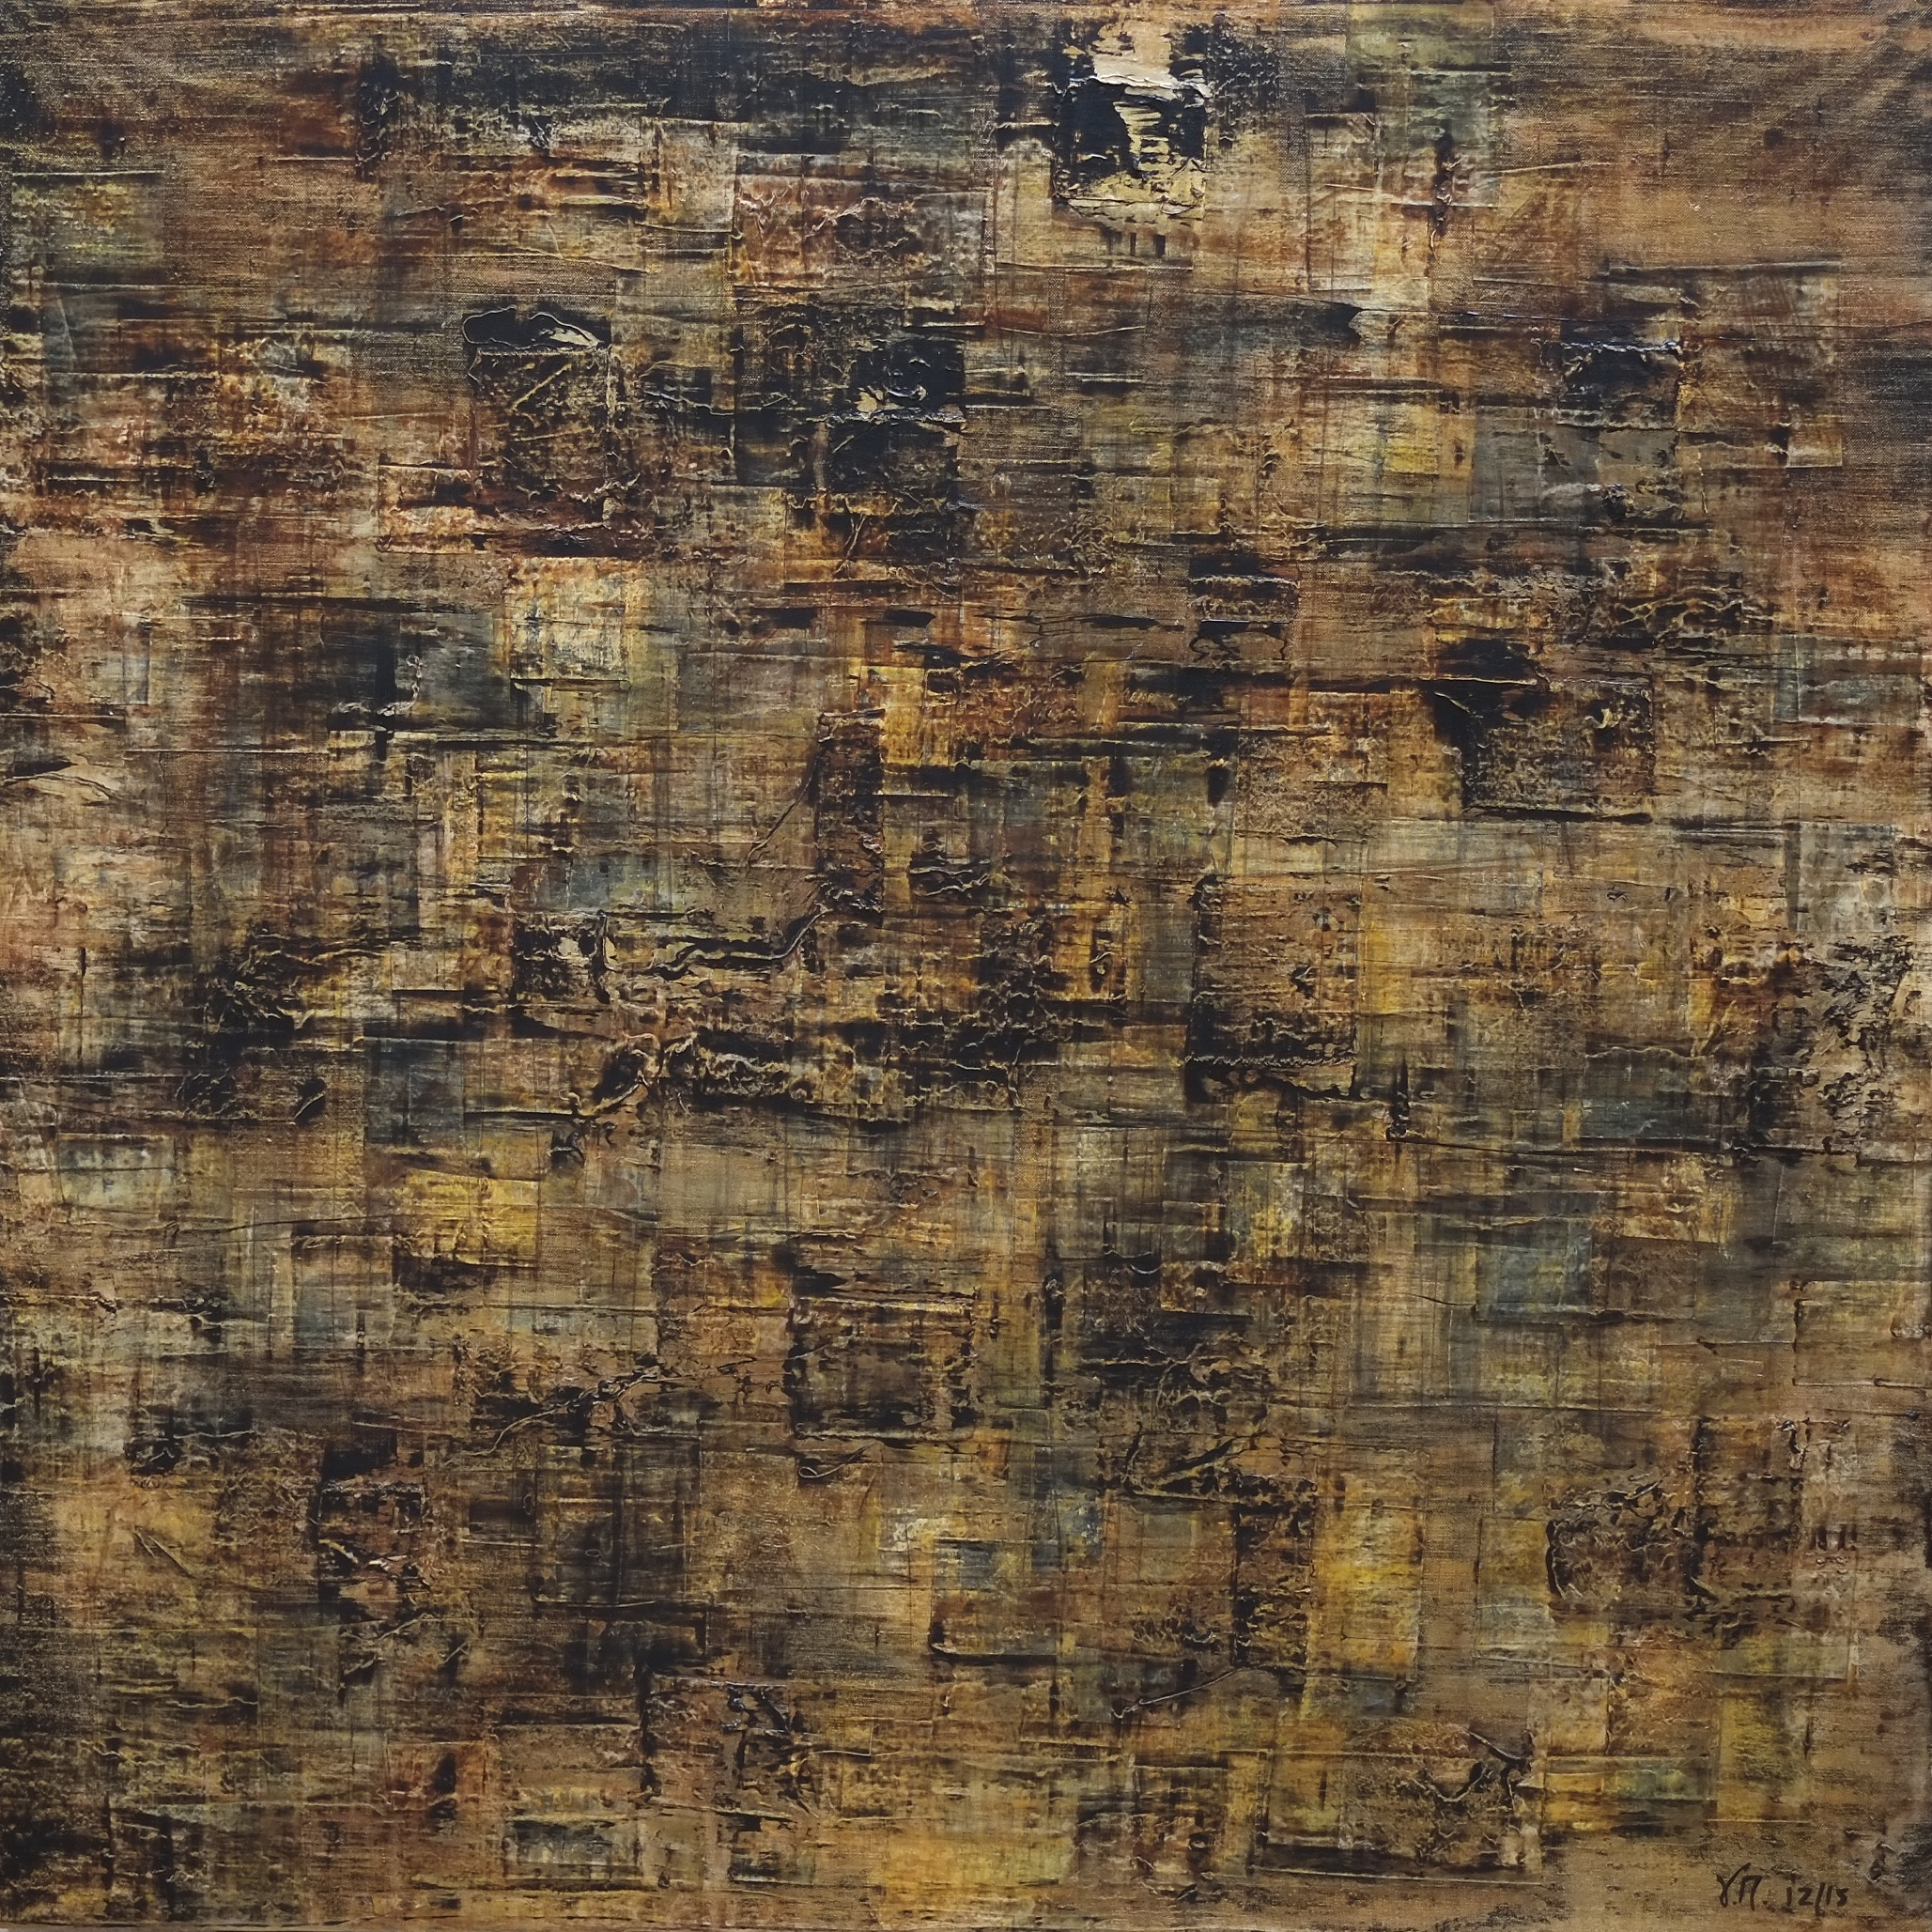  &nbsp;Untitled; mixed media on canvas; 90x90; 2015 